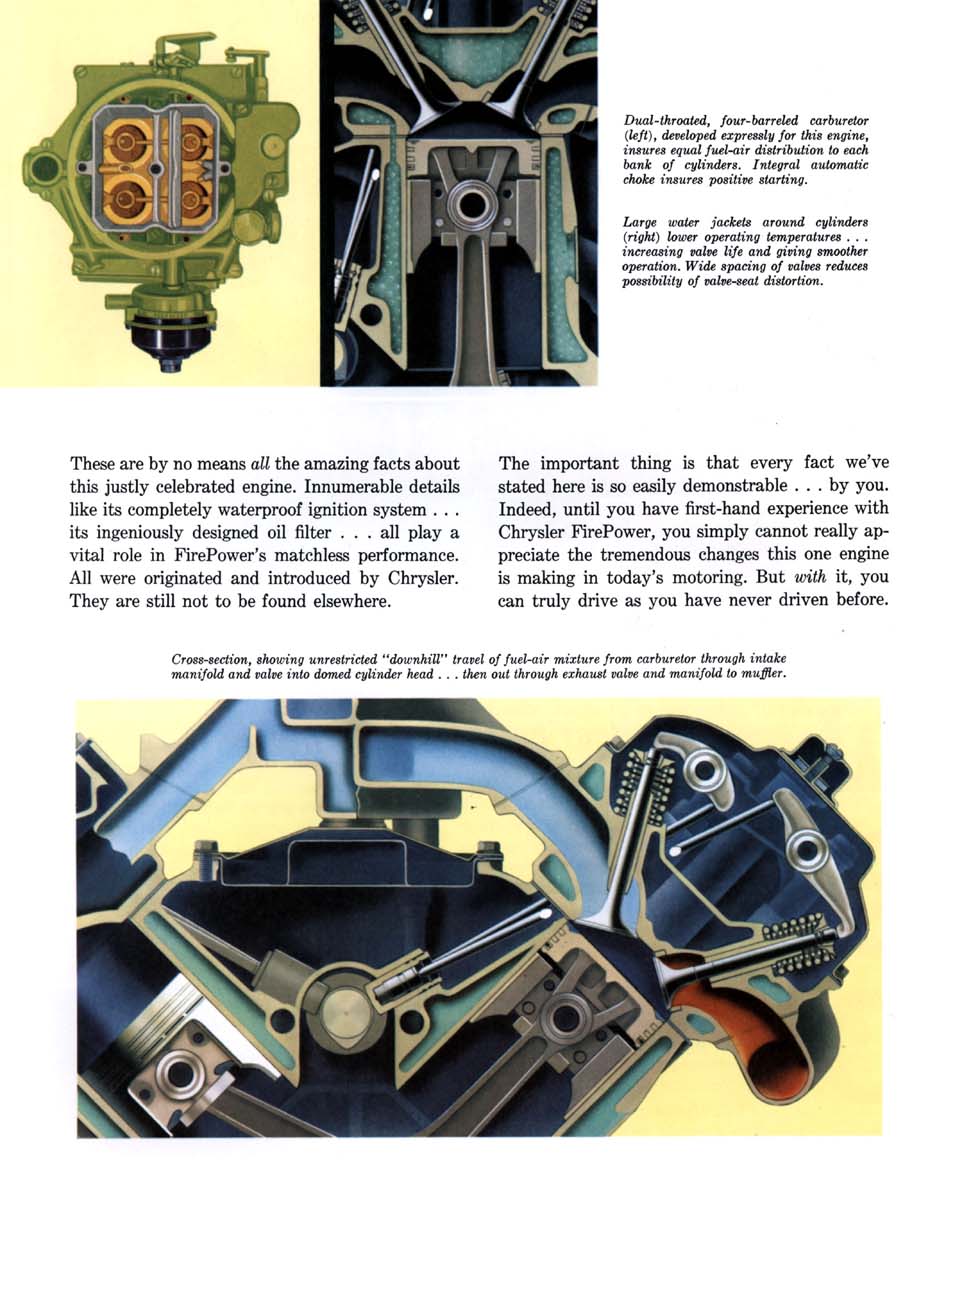 1954 Chrysler Engineering Brochure Page 11